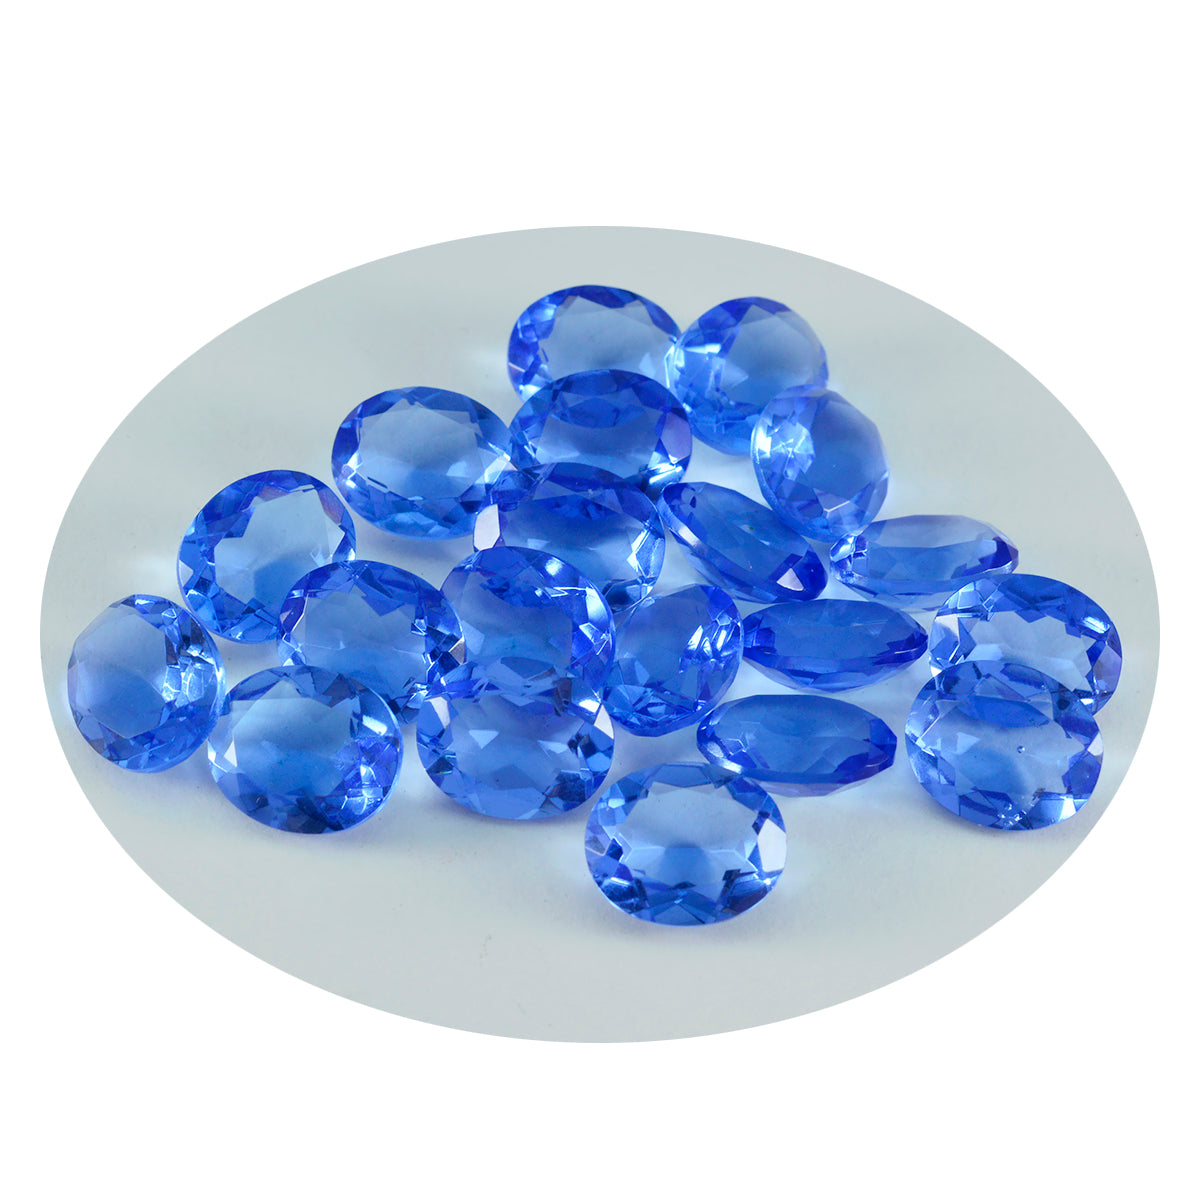 Riyogems 1 Stück blauer Saphir, CZ, facettiert, 5 x 7 mm, ovale Form, A+-Qualität, loser Edelstein